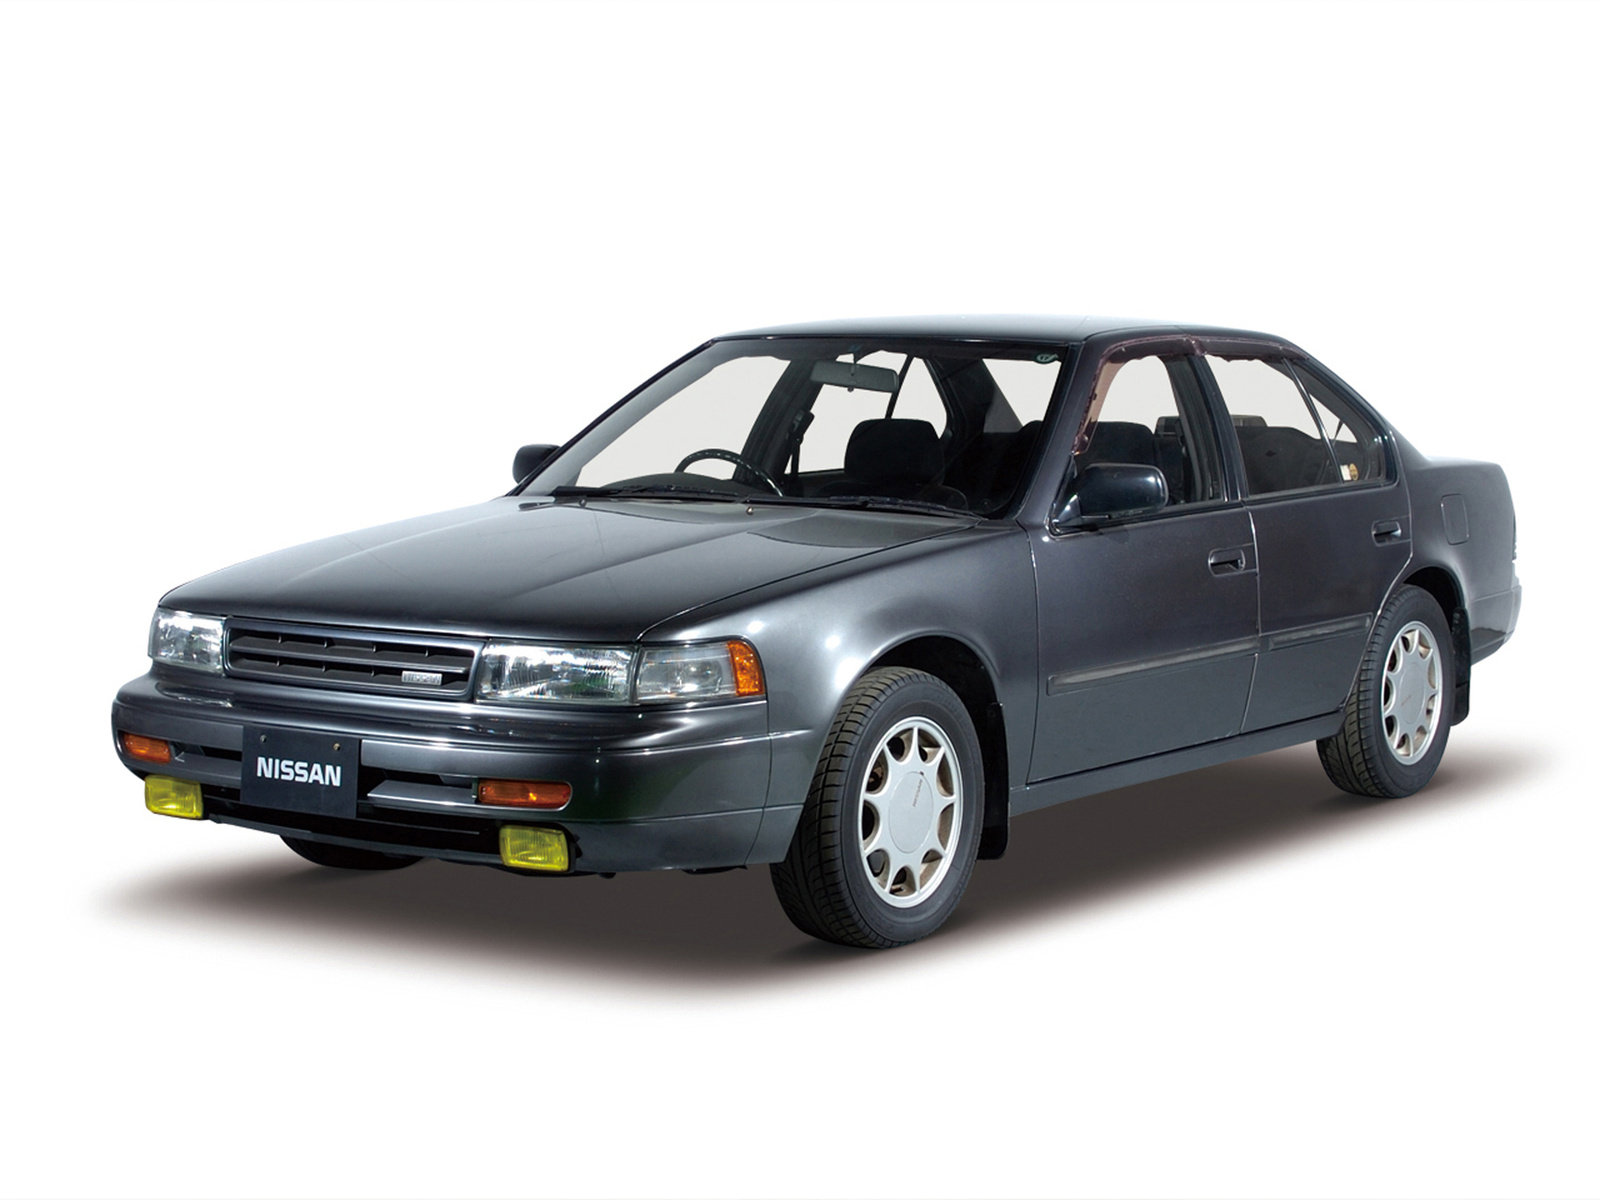 Nissan_maxima_1984-1988_original